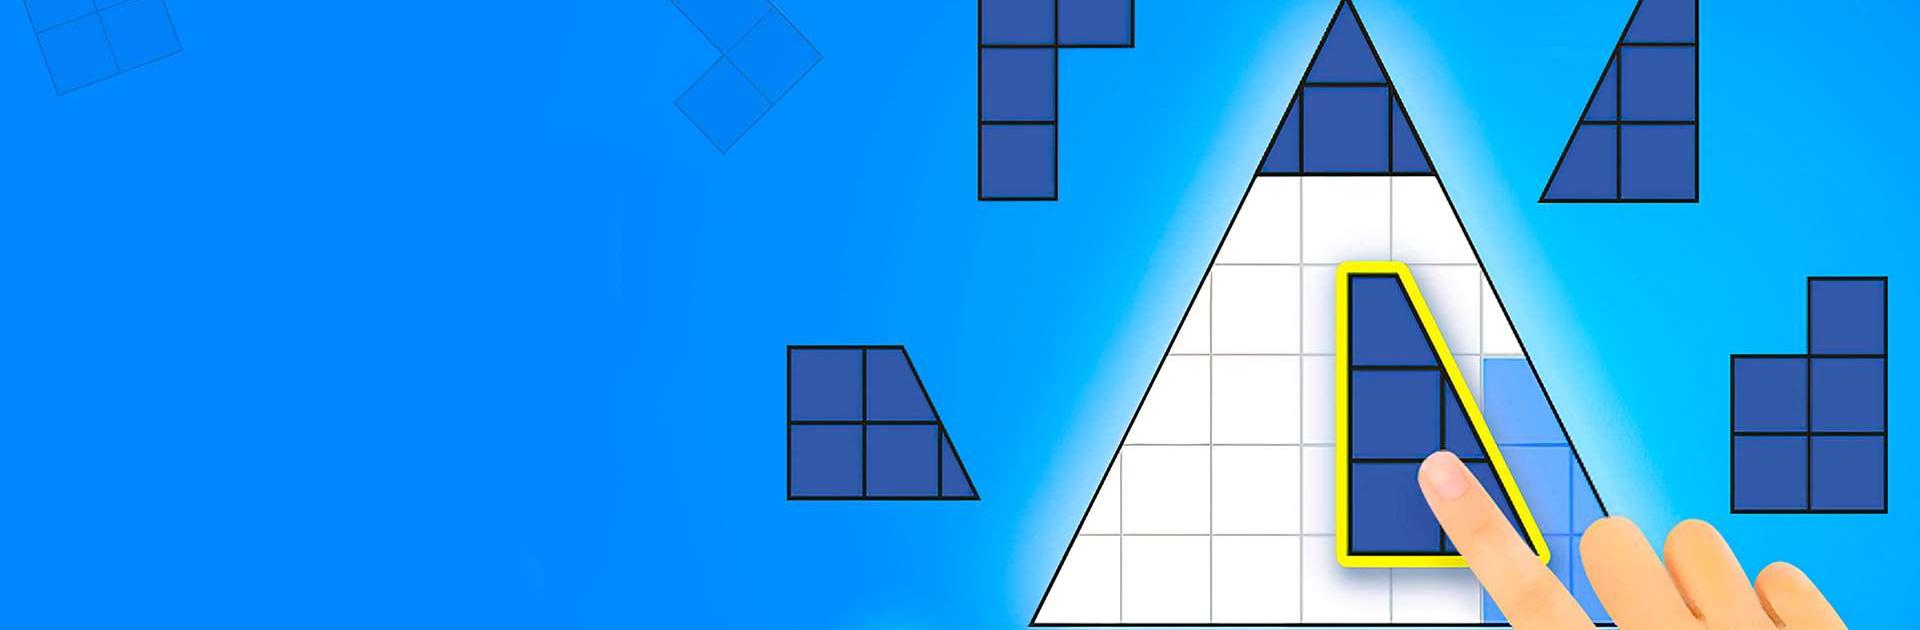 Blockudoku - block puzzle game